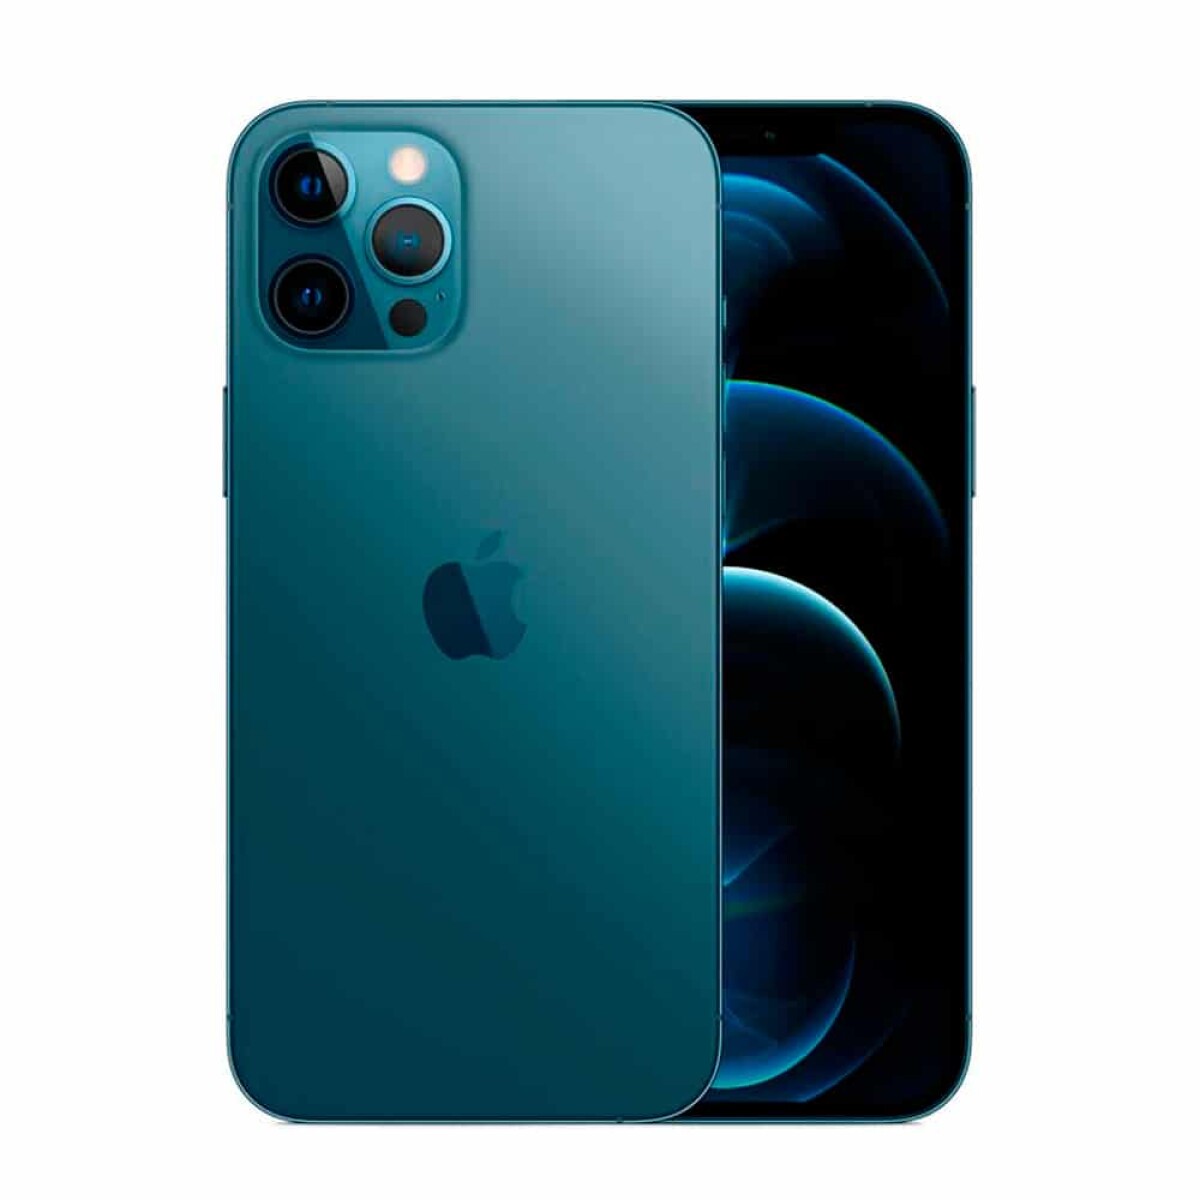 Apple iphone 12 pro max 128gb - Azul pacifico 